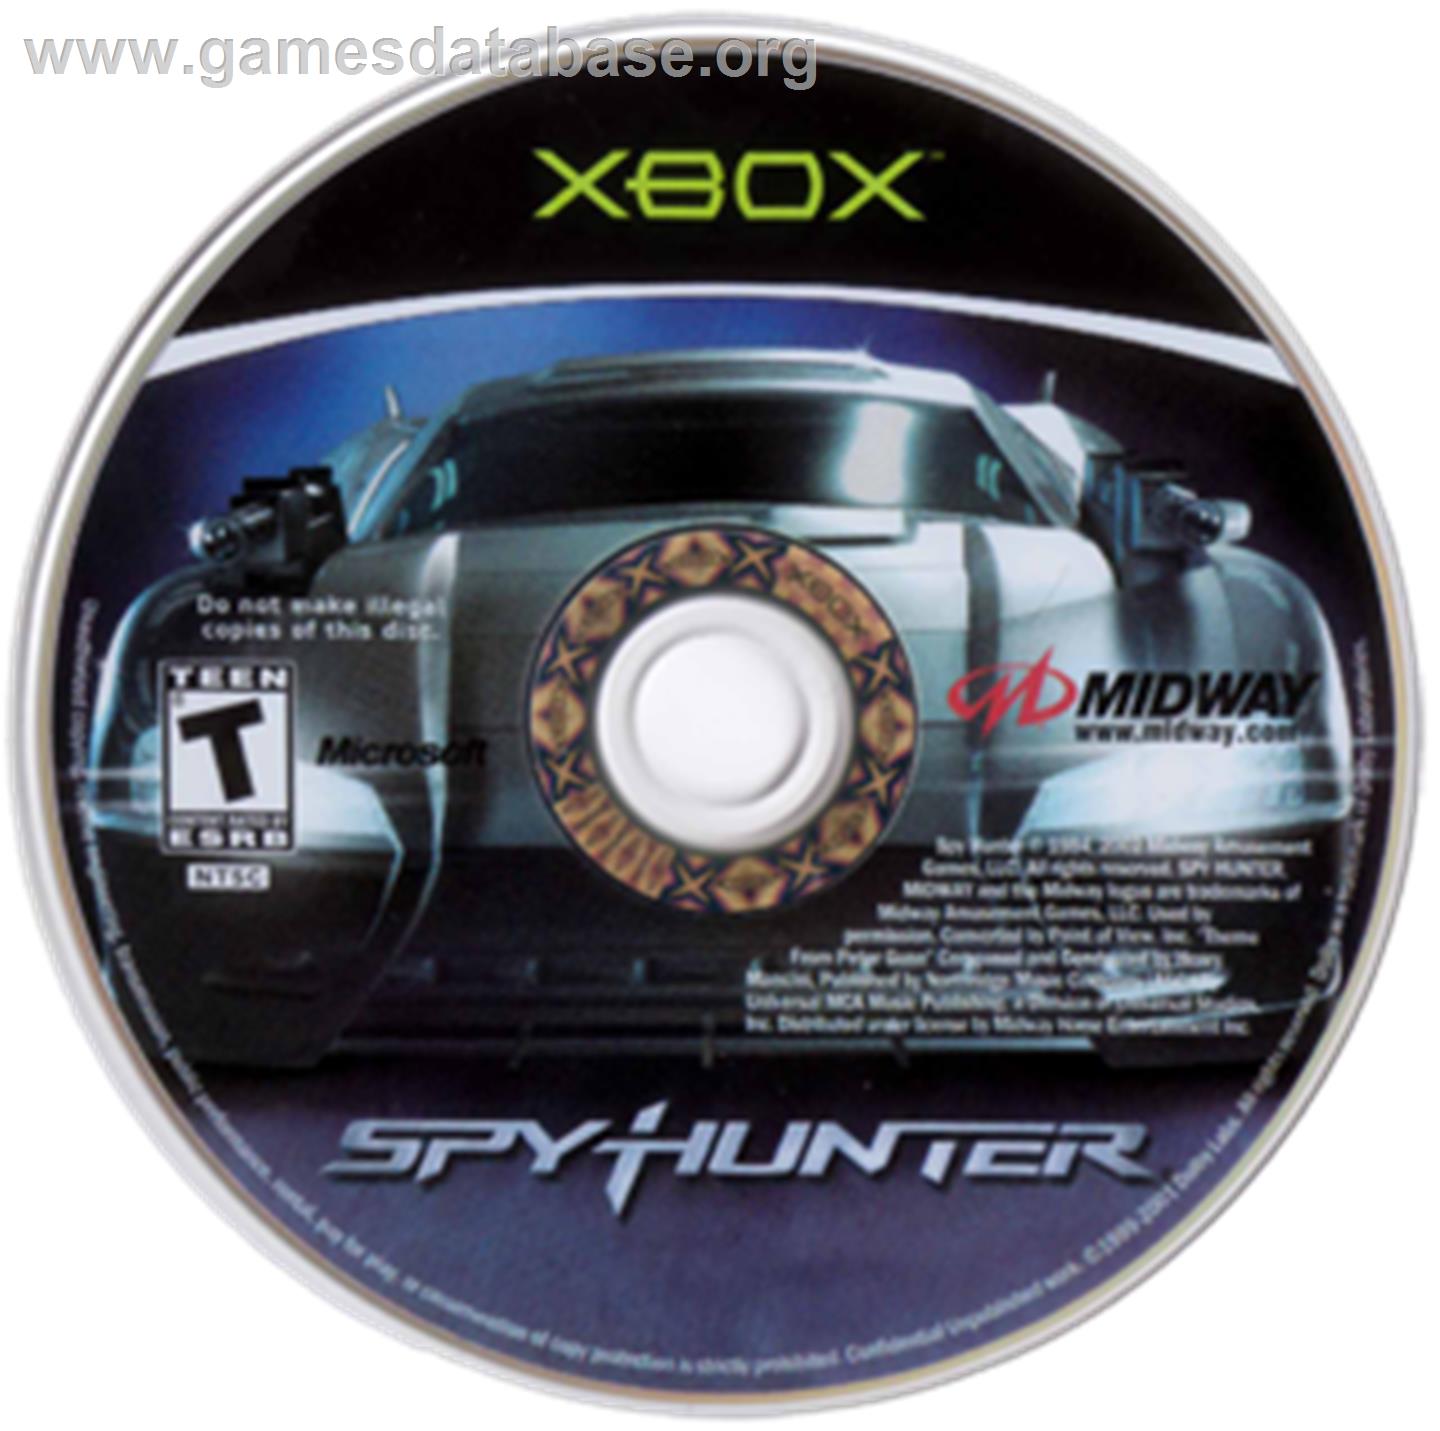 Spy Hunter - Microsoft Xbox - Artwork - CD